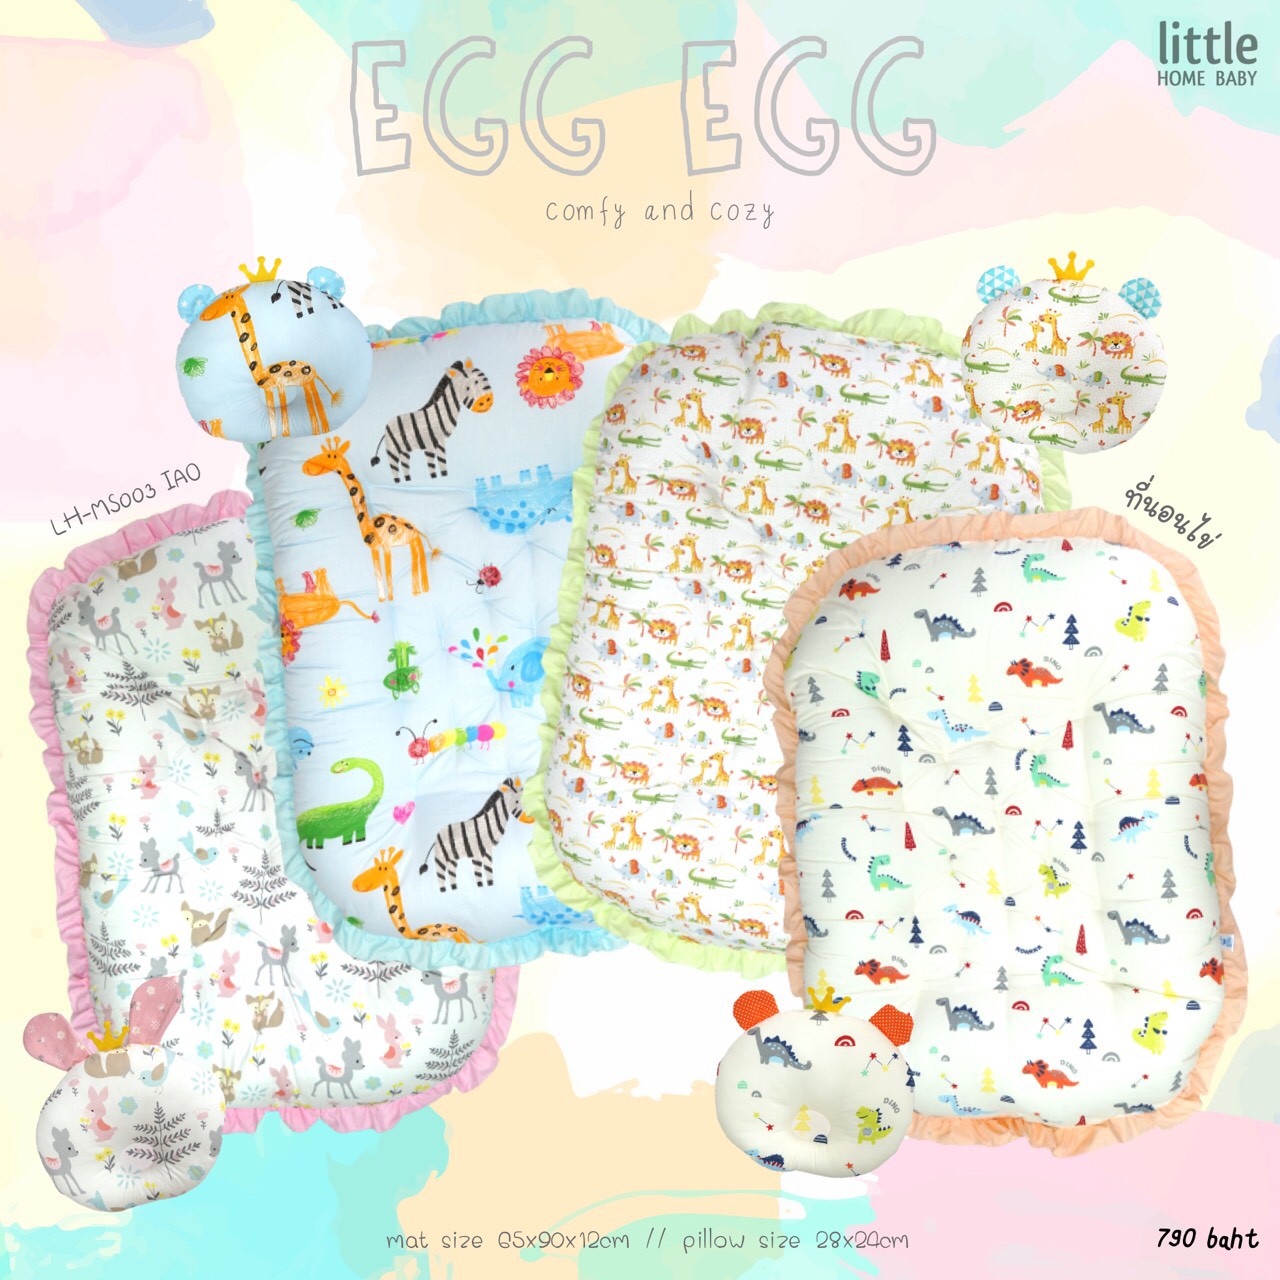 Baby Bed set - Egg Egg collection